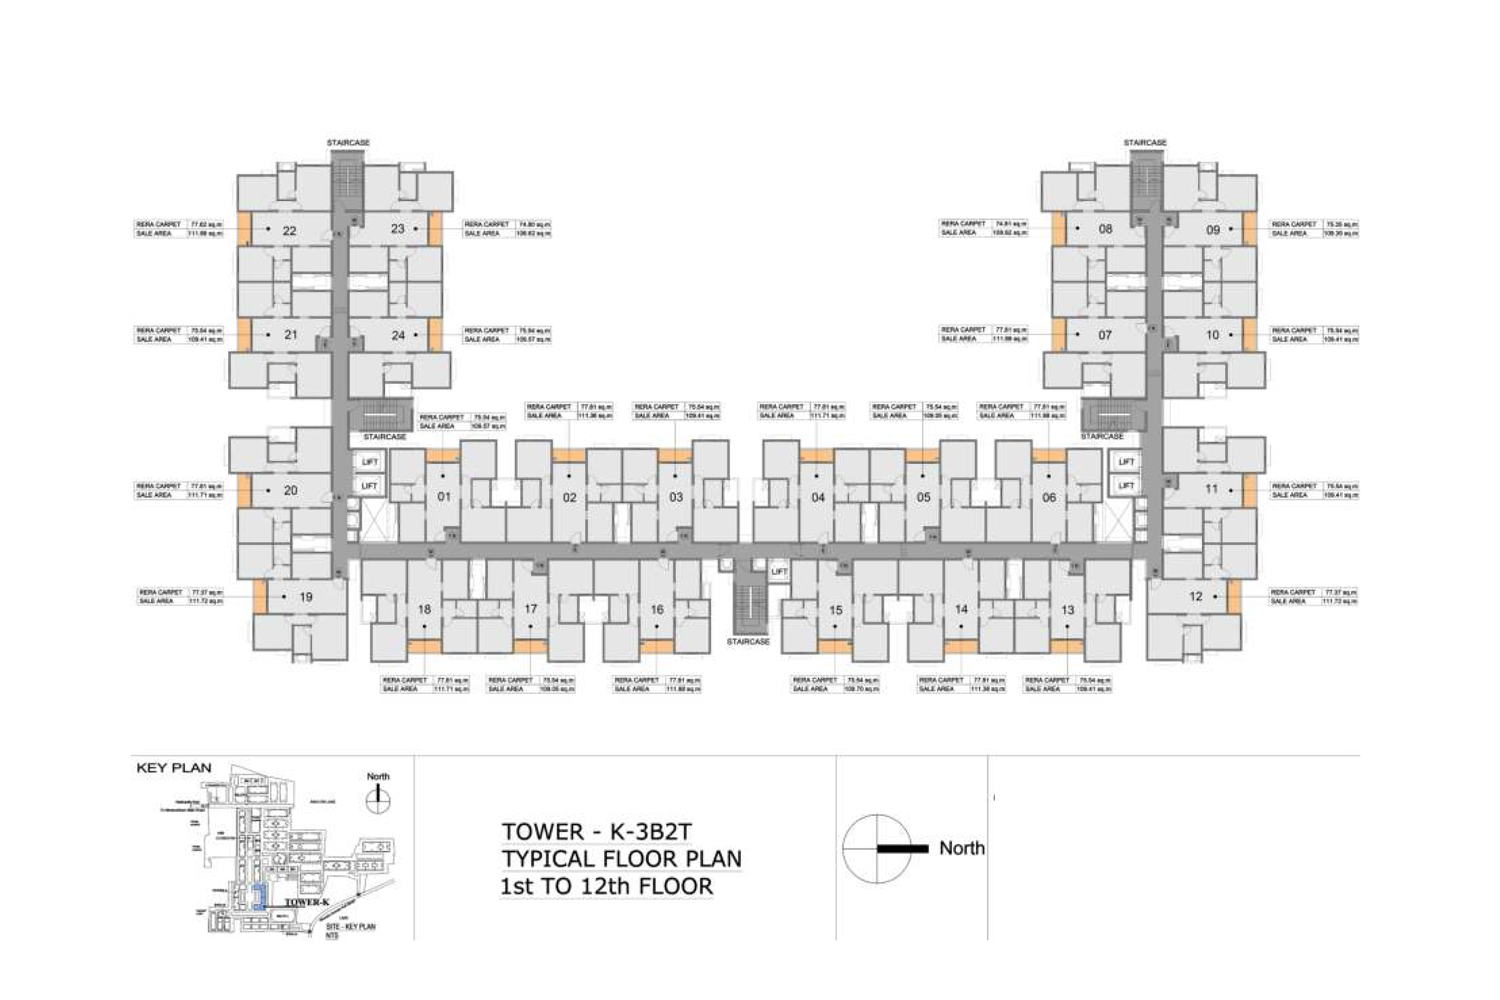 Typical Floor Plan - K, 1st To 12th Floor